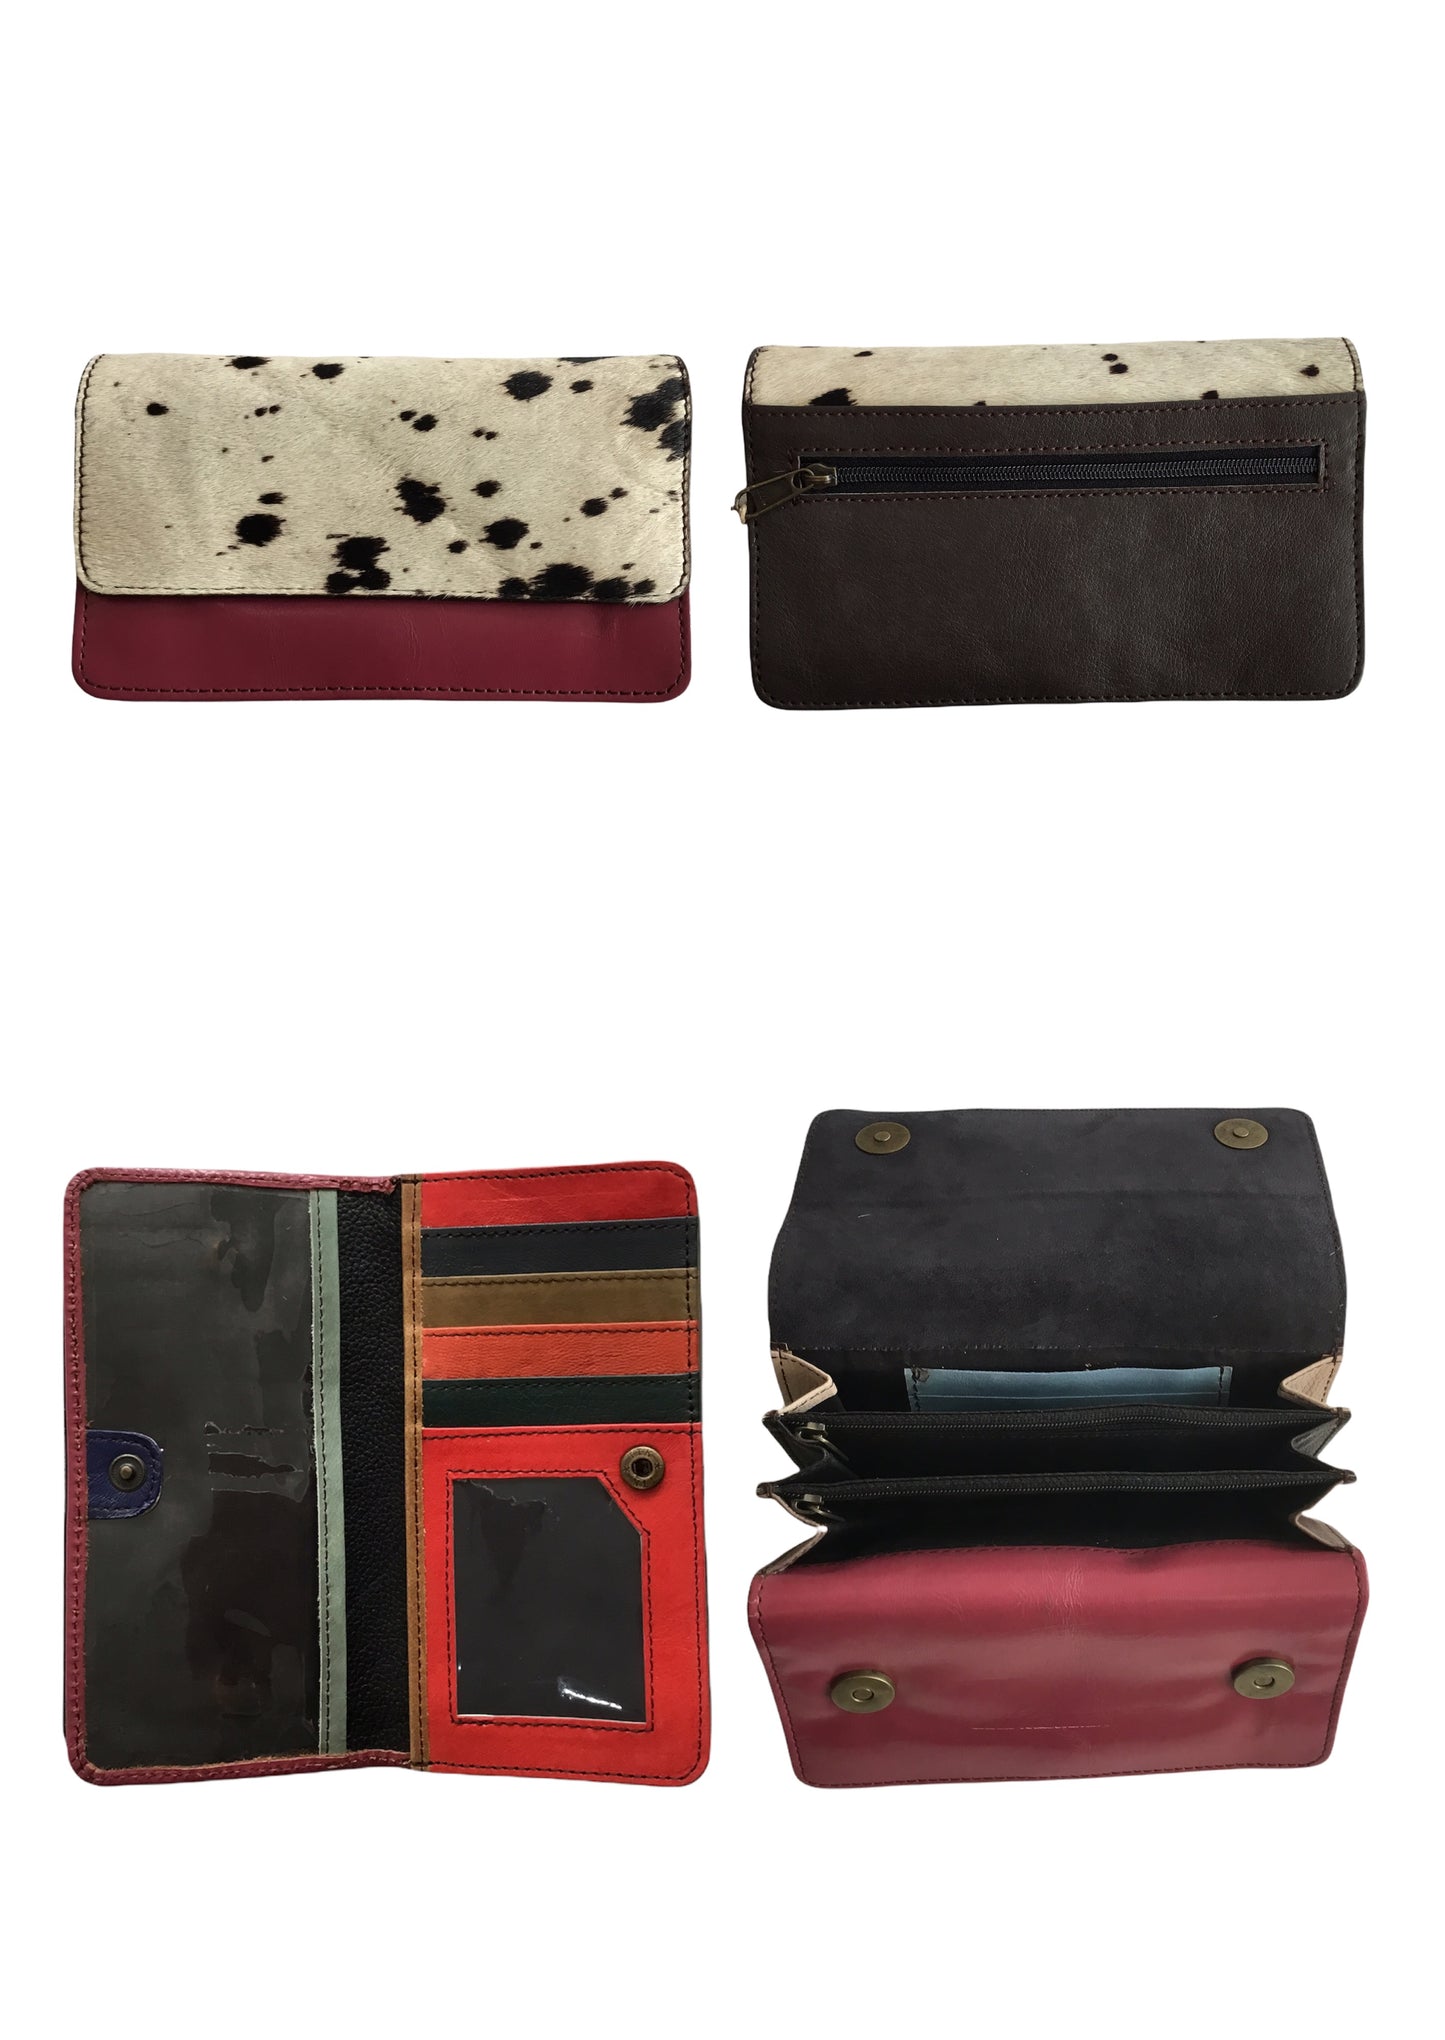 Gringo - Multi Leather & Fur Wallet Flap Over